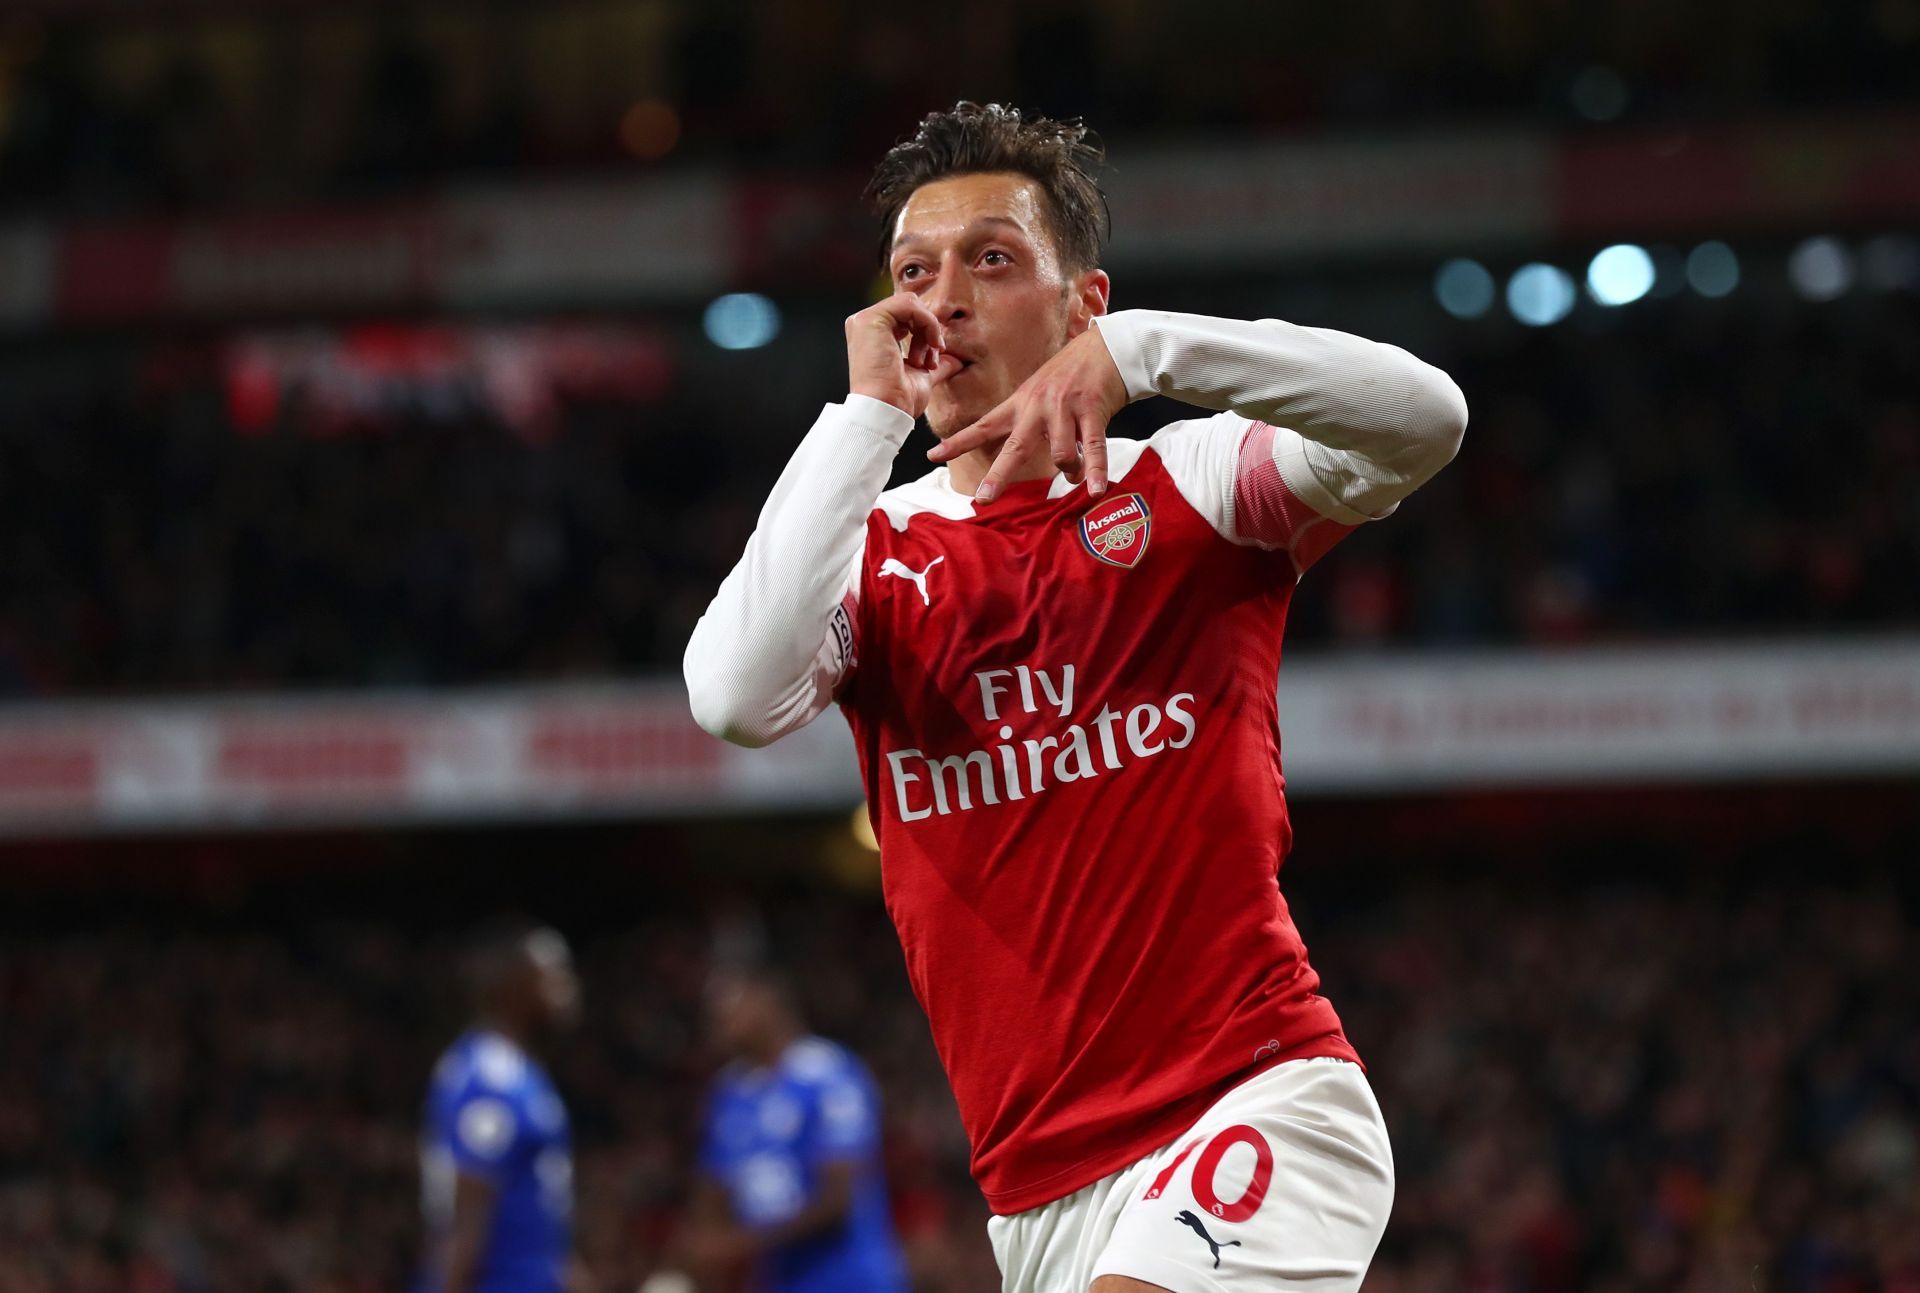 Mesut Ozil had been sensational for Arsenal